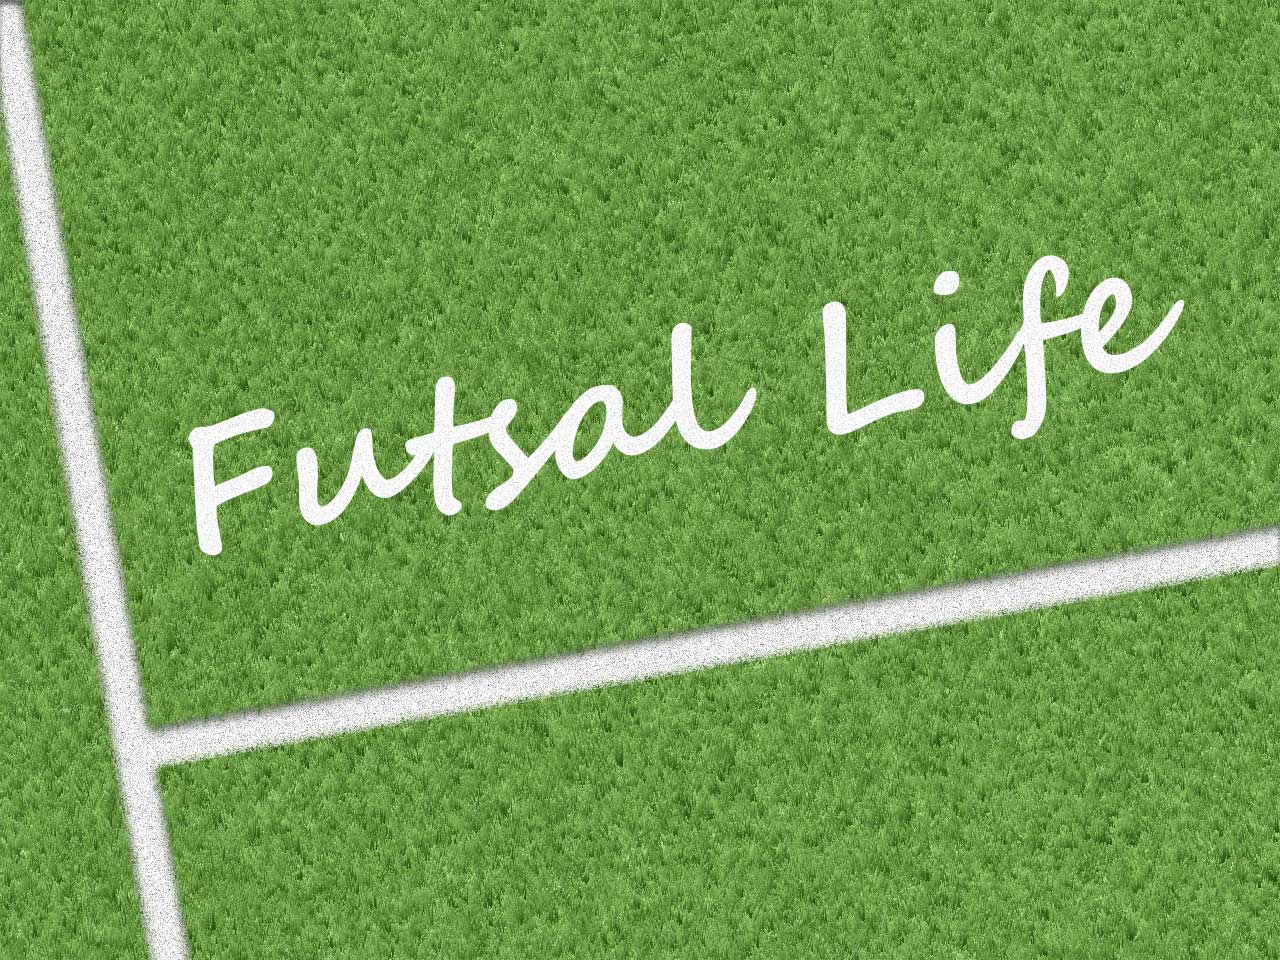 Futsal Life